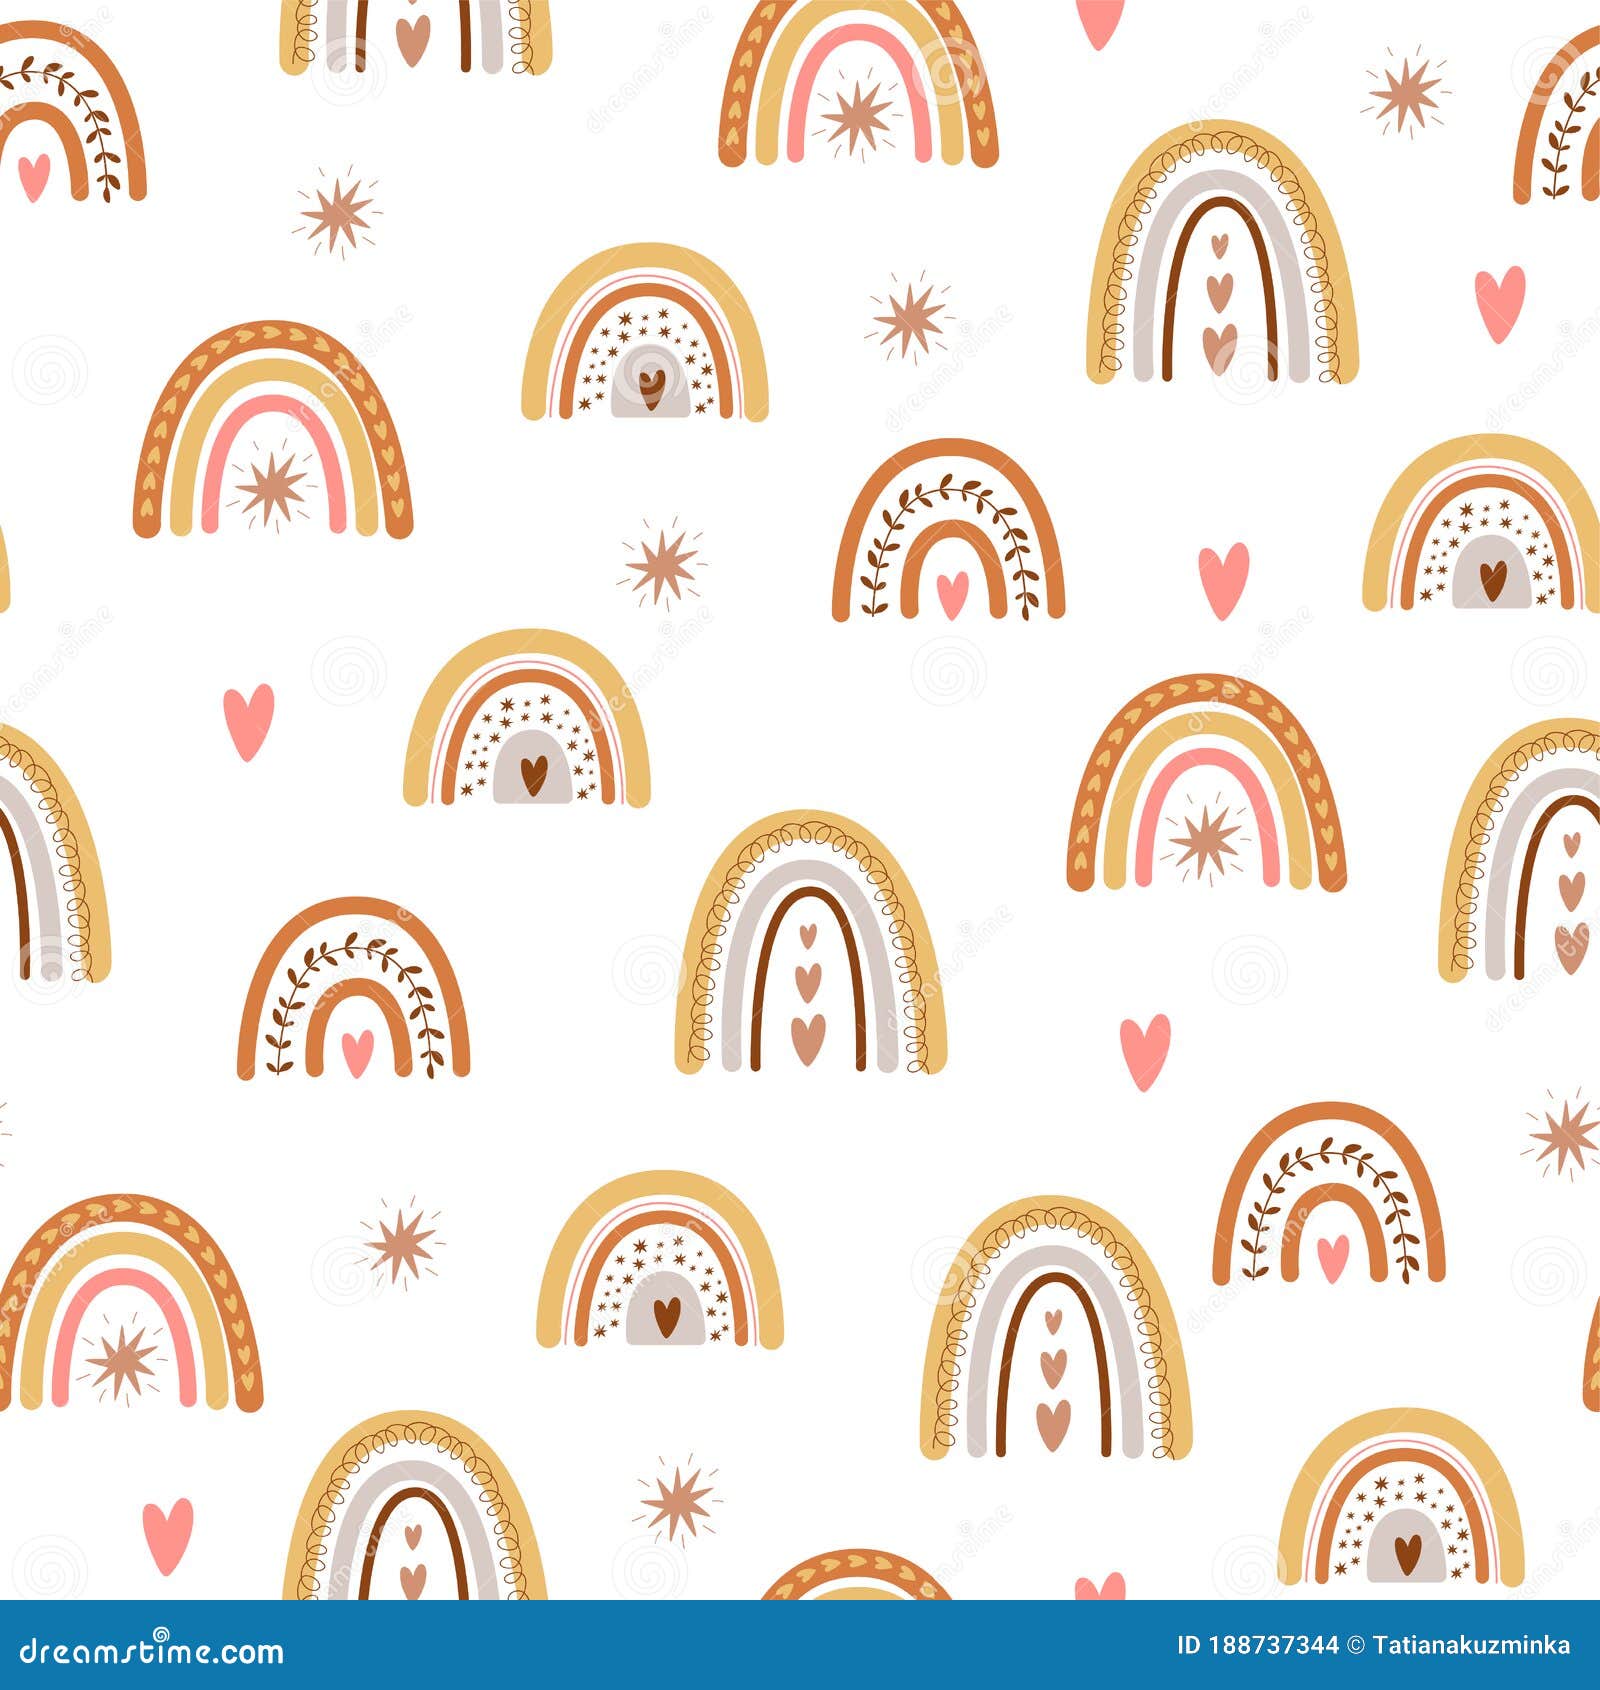 6 Boho Rainbow Pattern Wall Stickers Decal Bedroom Kids Children Nursery Tee Pee